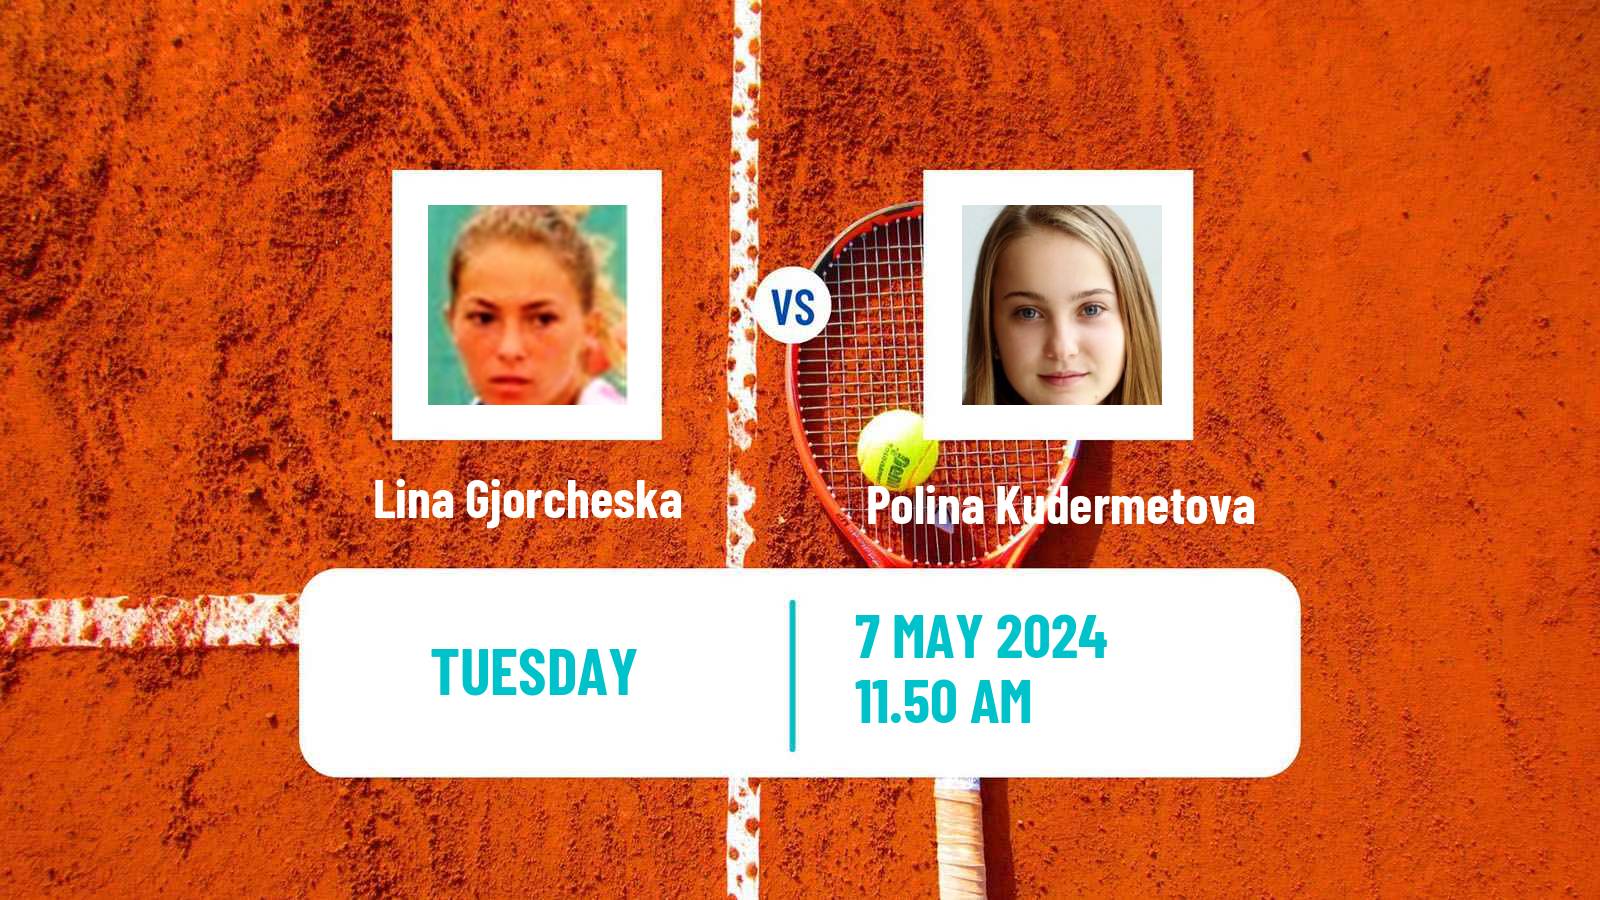 Tennis ITF W75 Trnava 2 Women Lina Gjorcheska - Polina Kudermetova